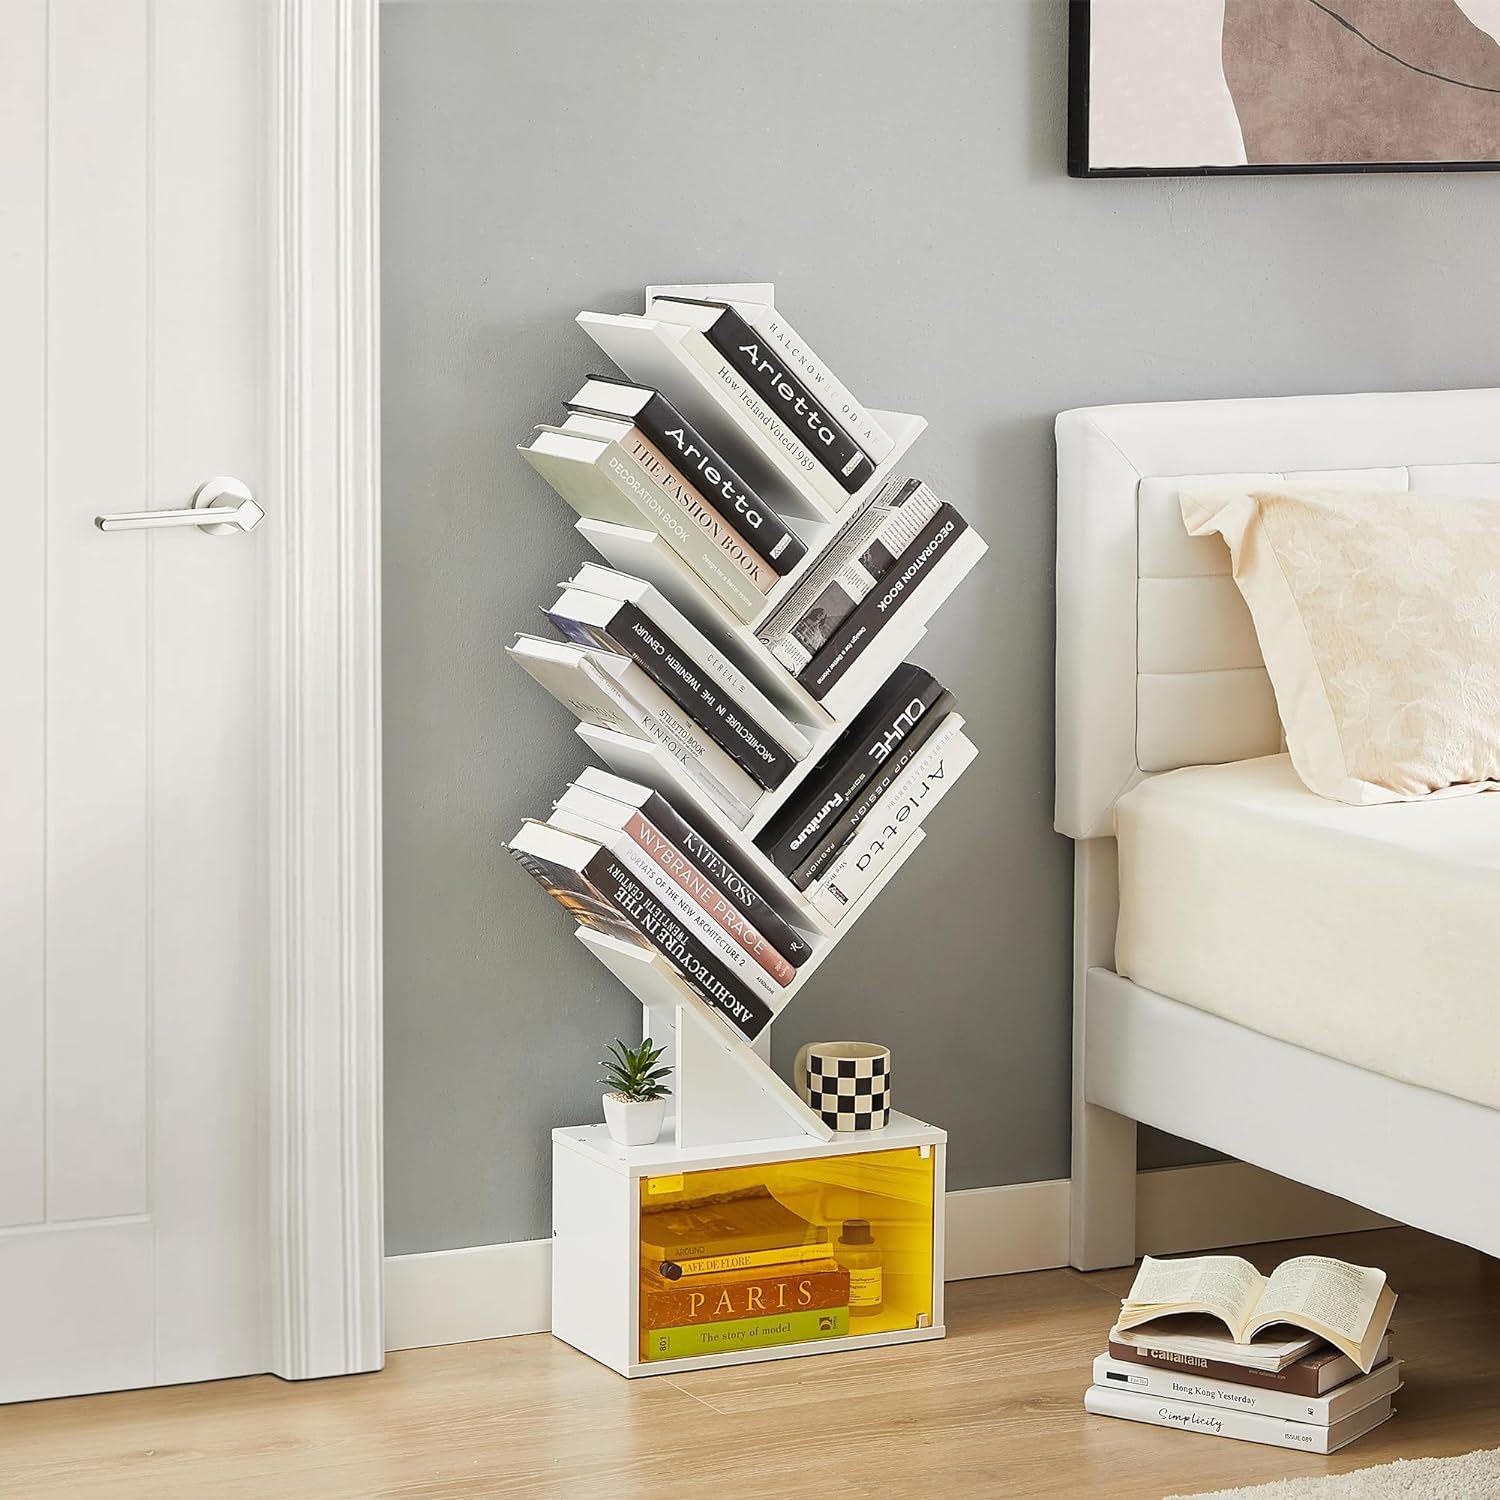 VECELO Tree Bookshelf, 7-Tier Tree Bookcase Wood Shelves Display with Storage Cabinet